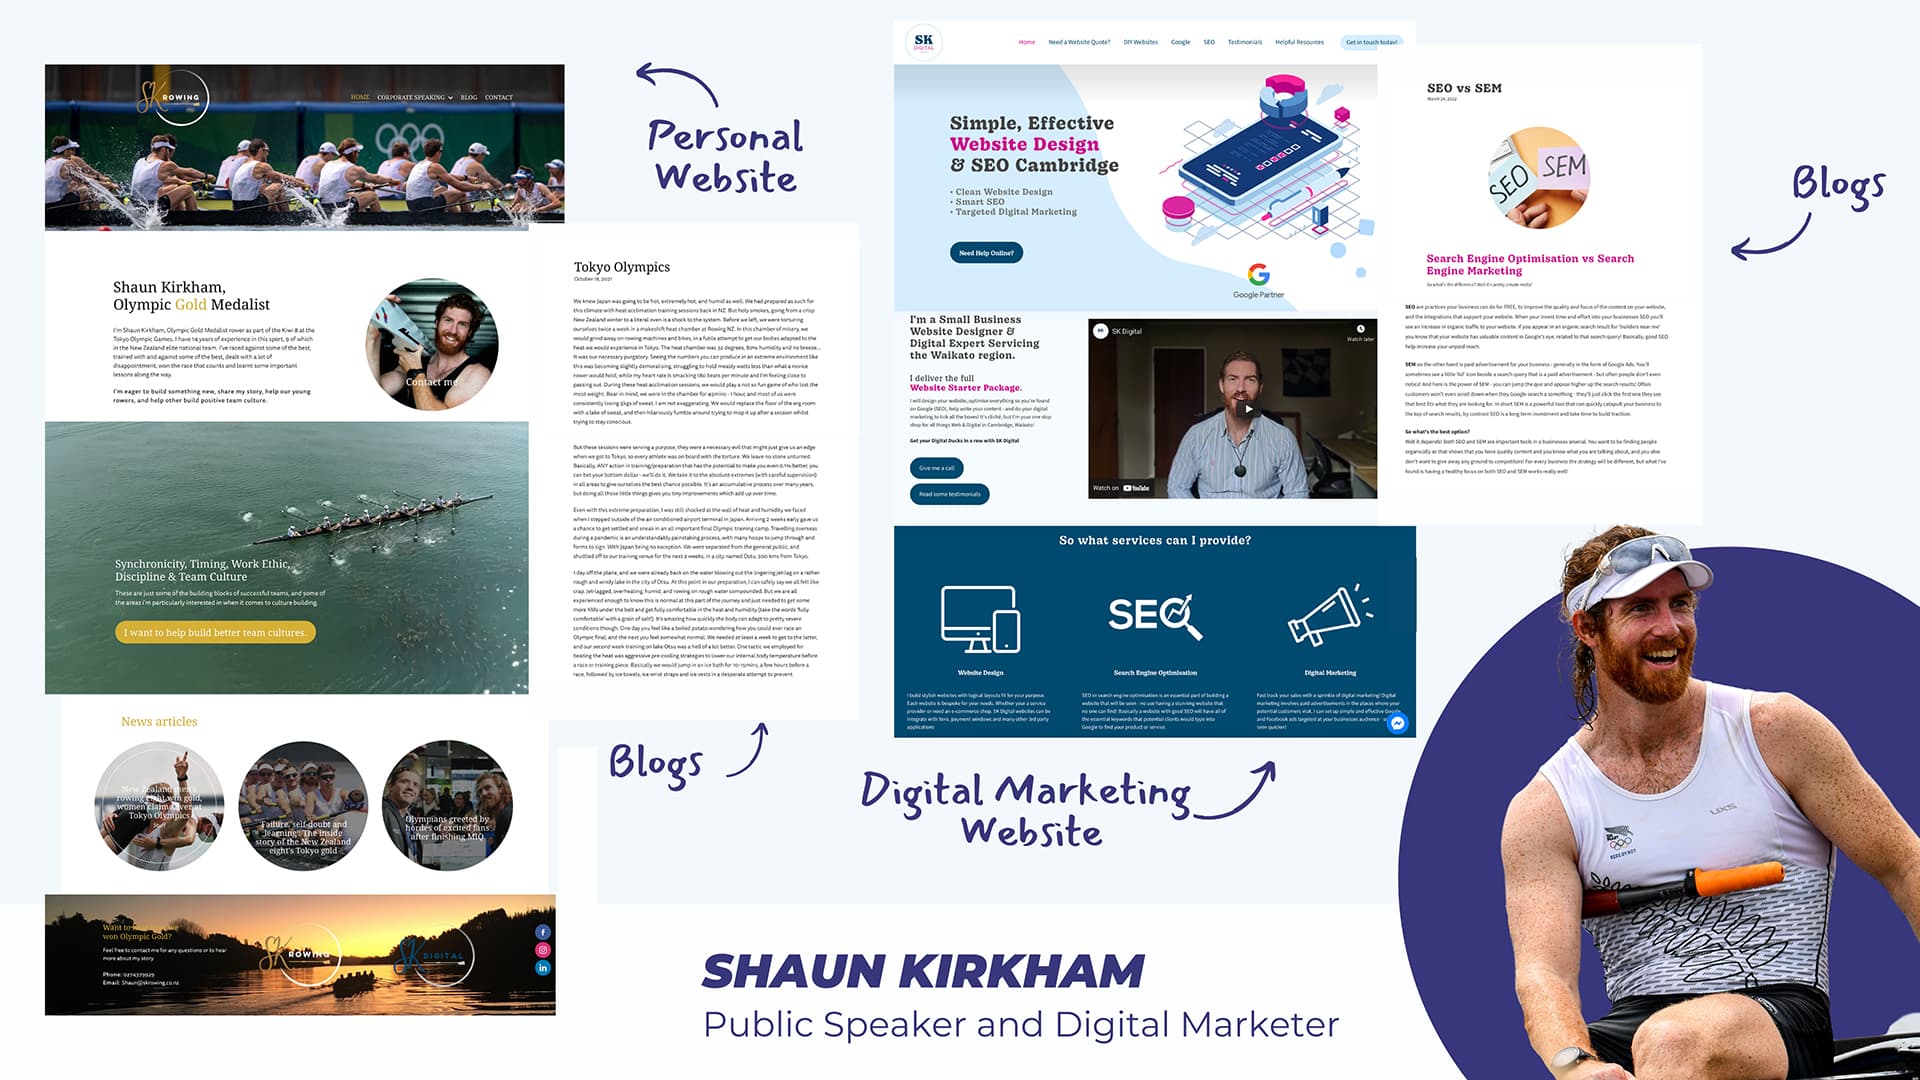 Shaun Kirkham (Rowing) - Public Speaker and Digital Marketer